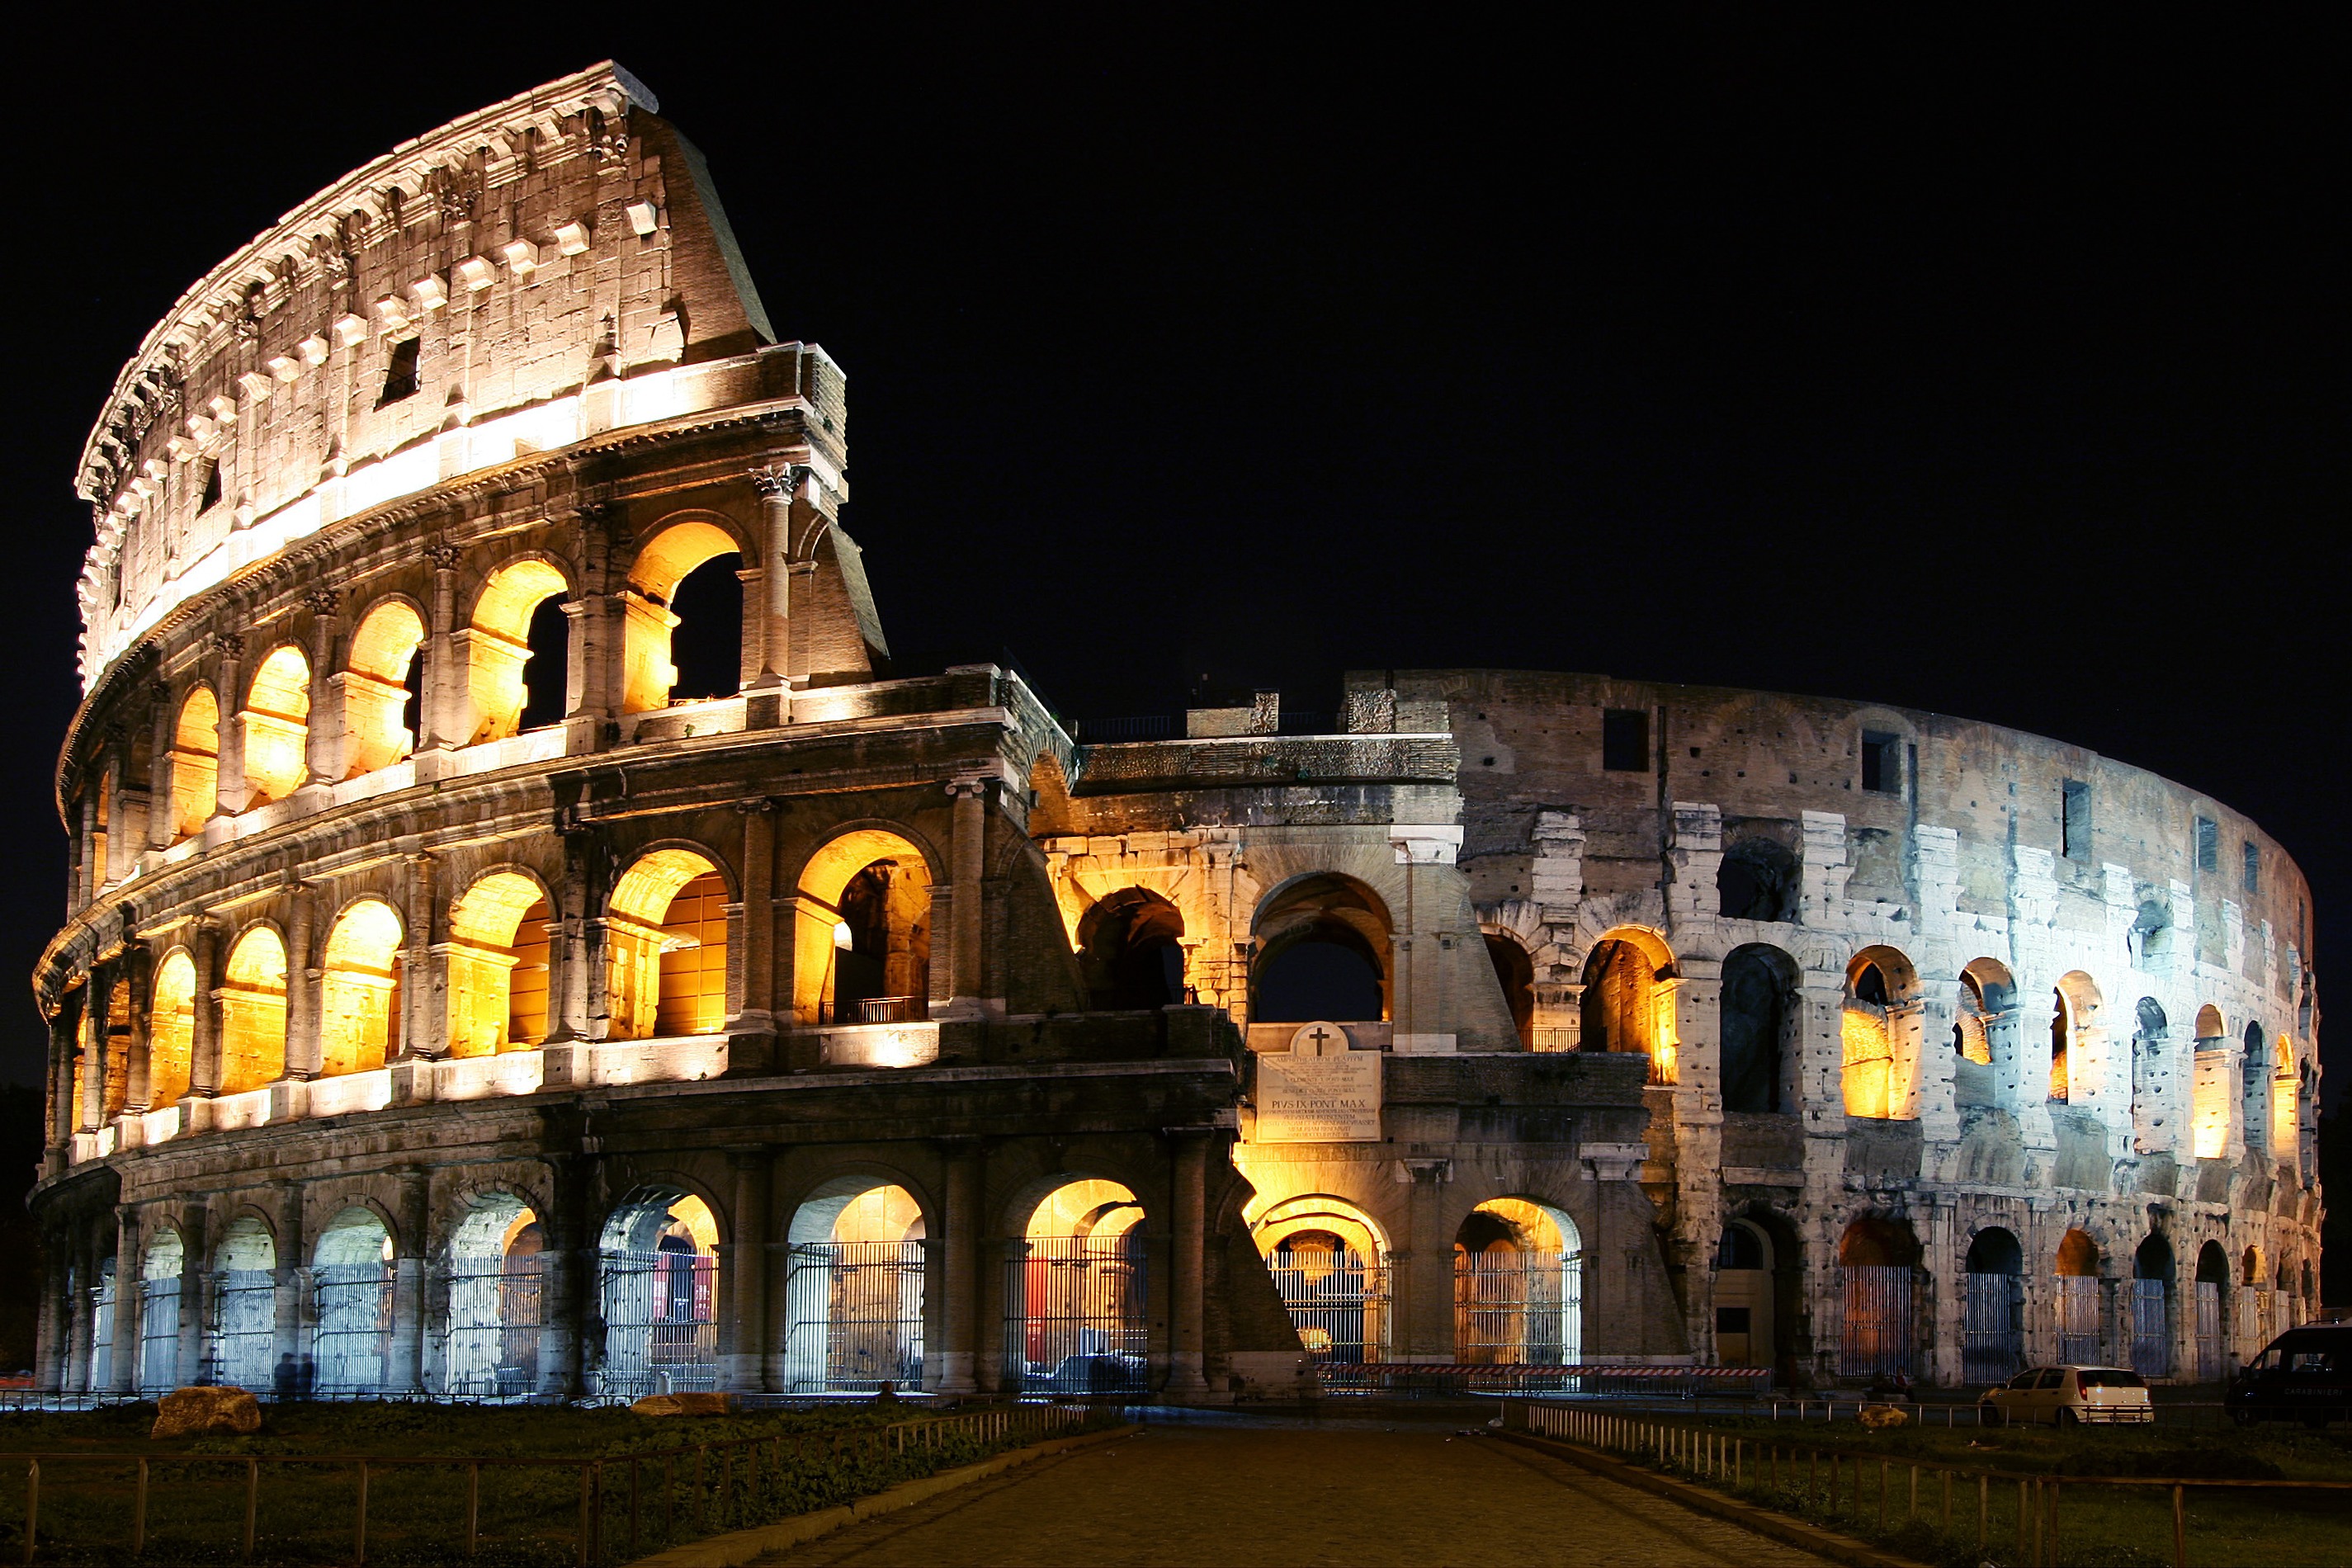 El Coliseo De Roma Coliseo Romano Coliseo De Roma | Images and Photos ...